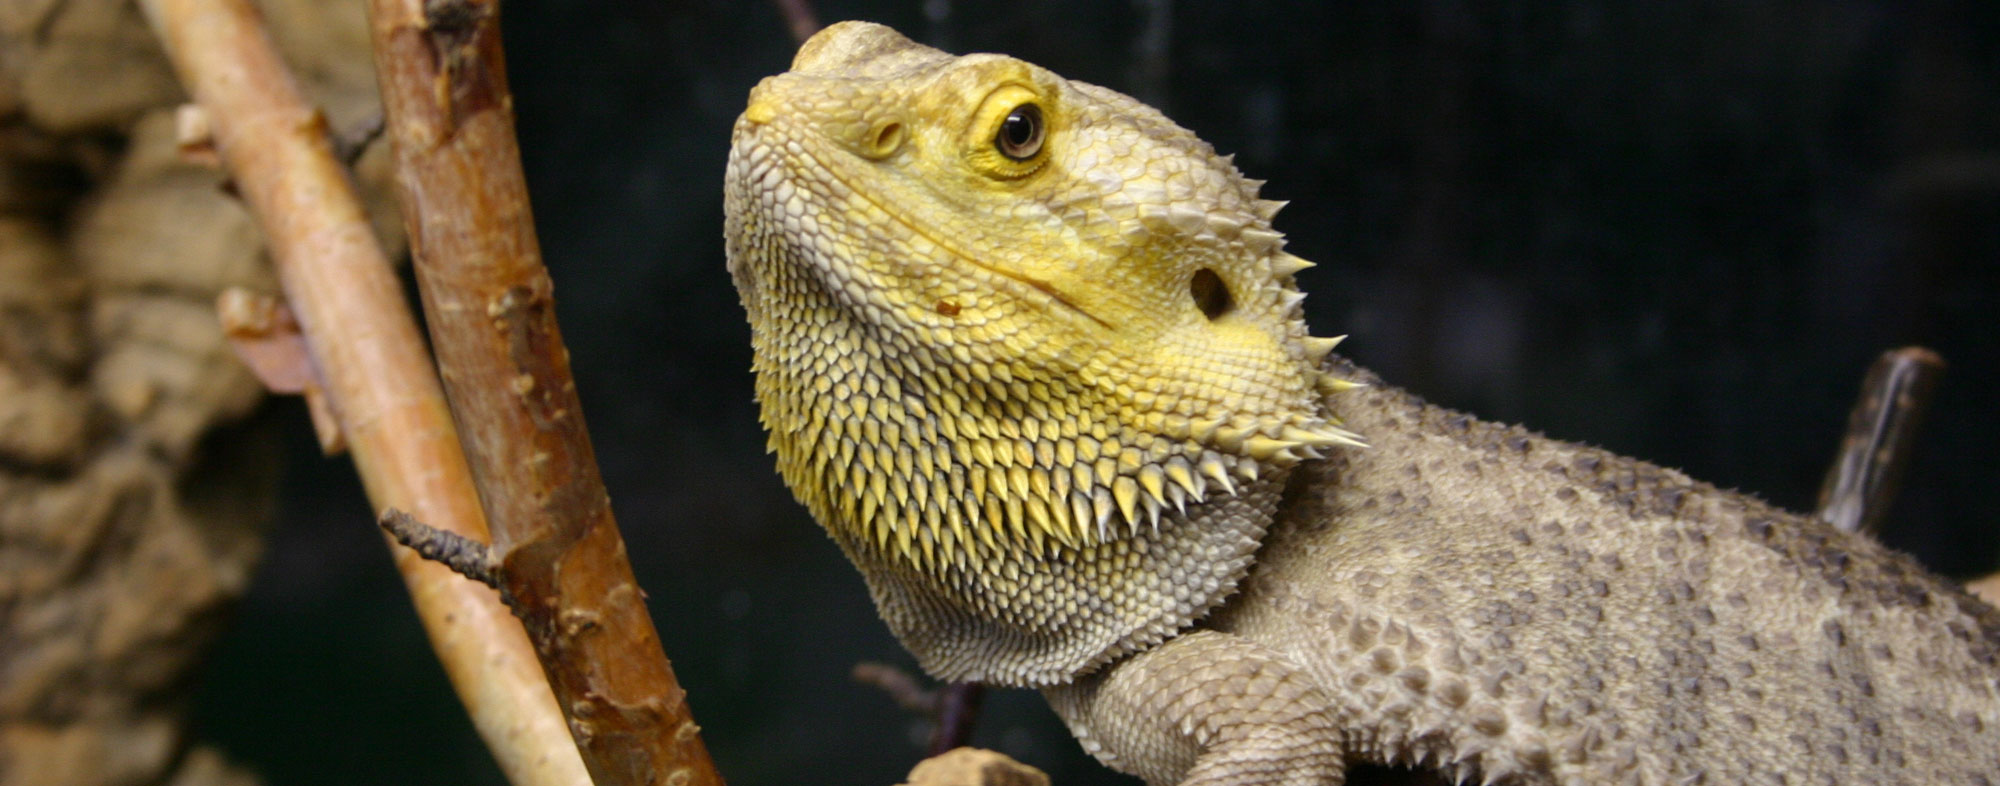 Pet reptile receiving proper warmth and lighting inside his vivarium